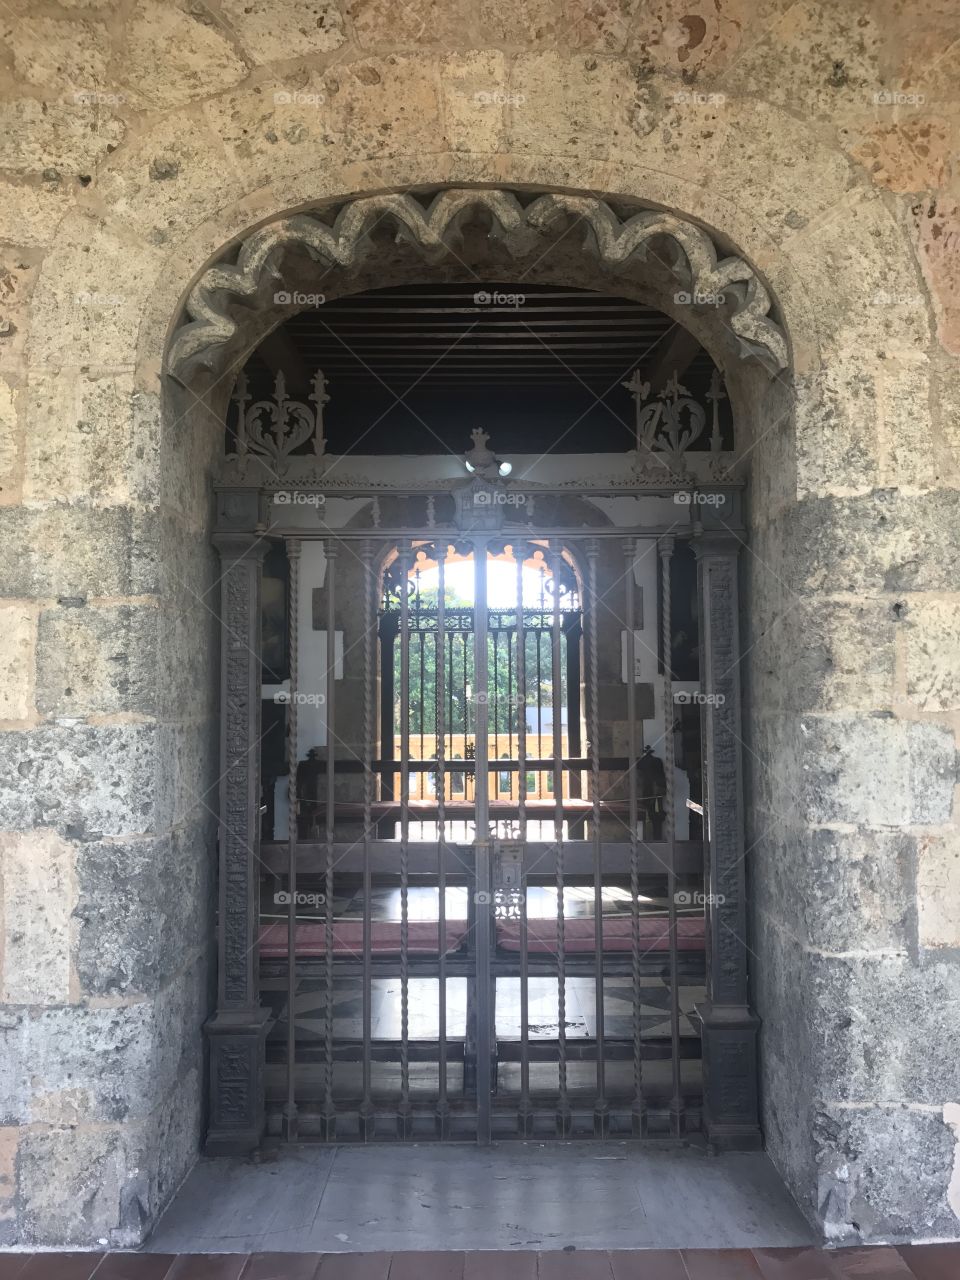 Gates to the Alcazar de Colon, Diego Columbus’s house in Santo Domingo, Dominican Republic